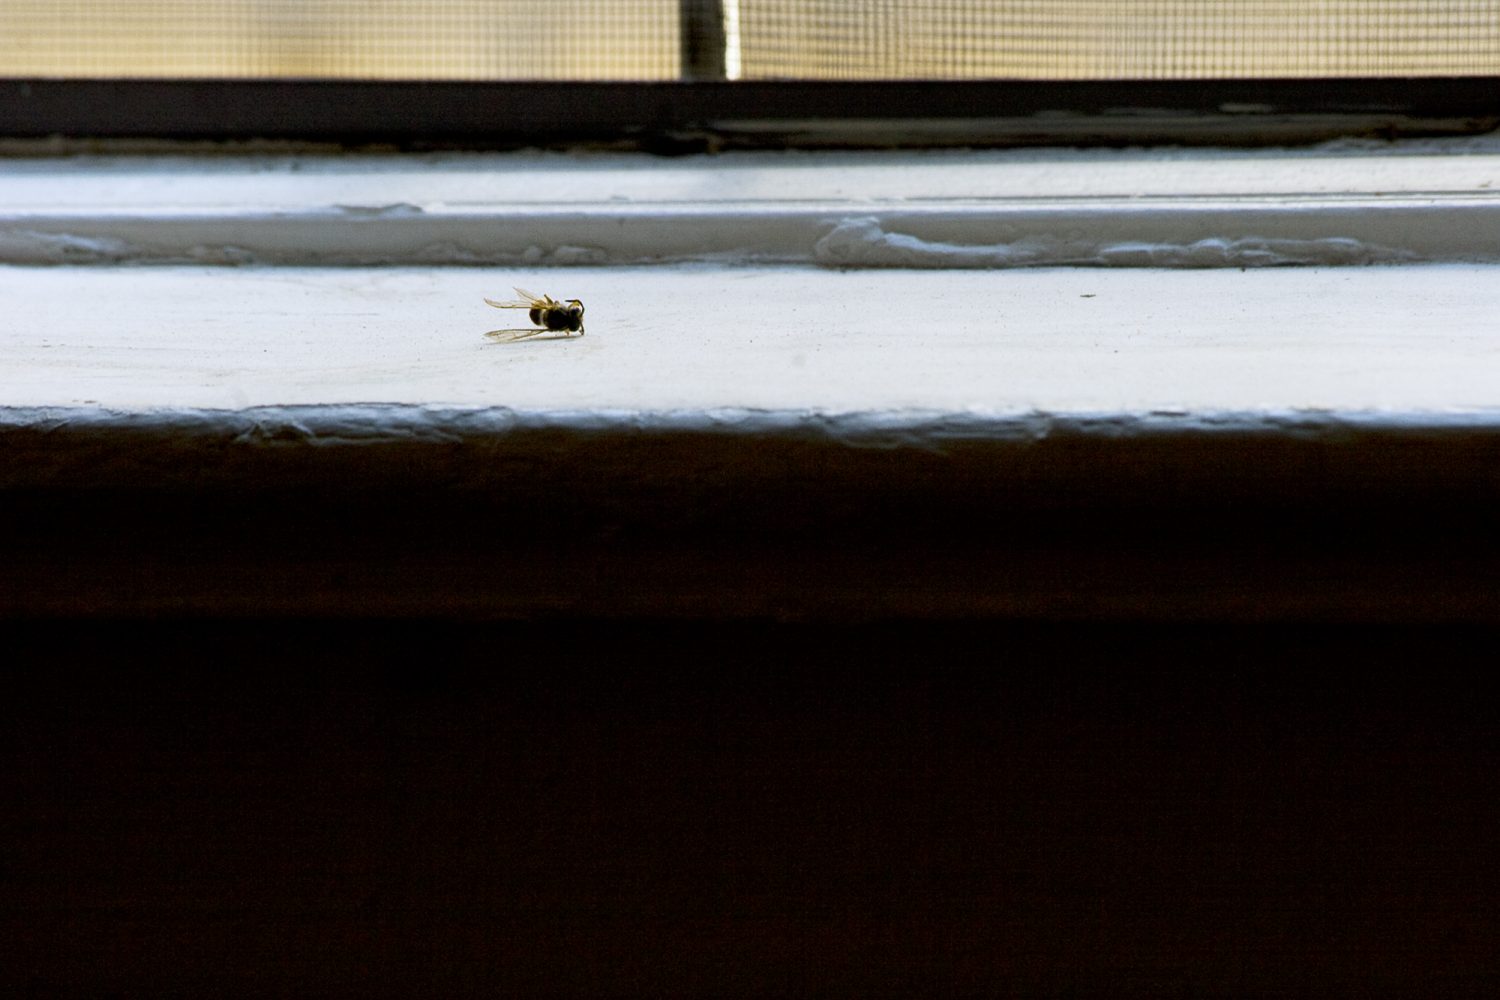 Wasp Dead on Its Side on Window Ledge 